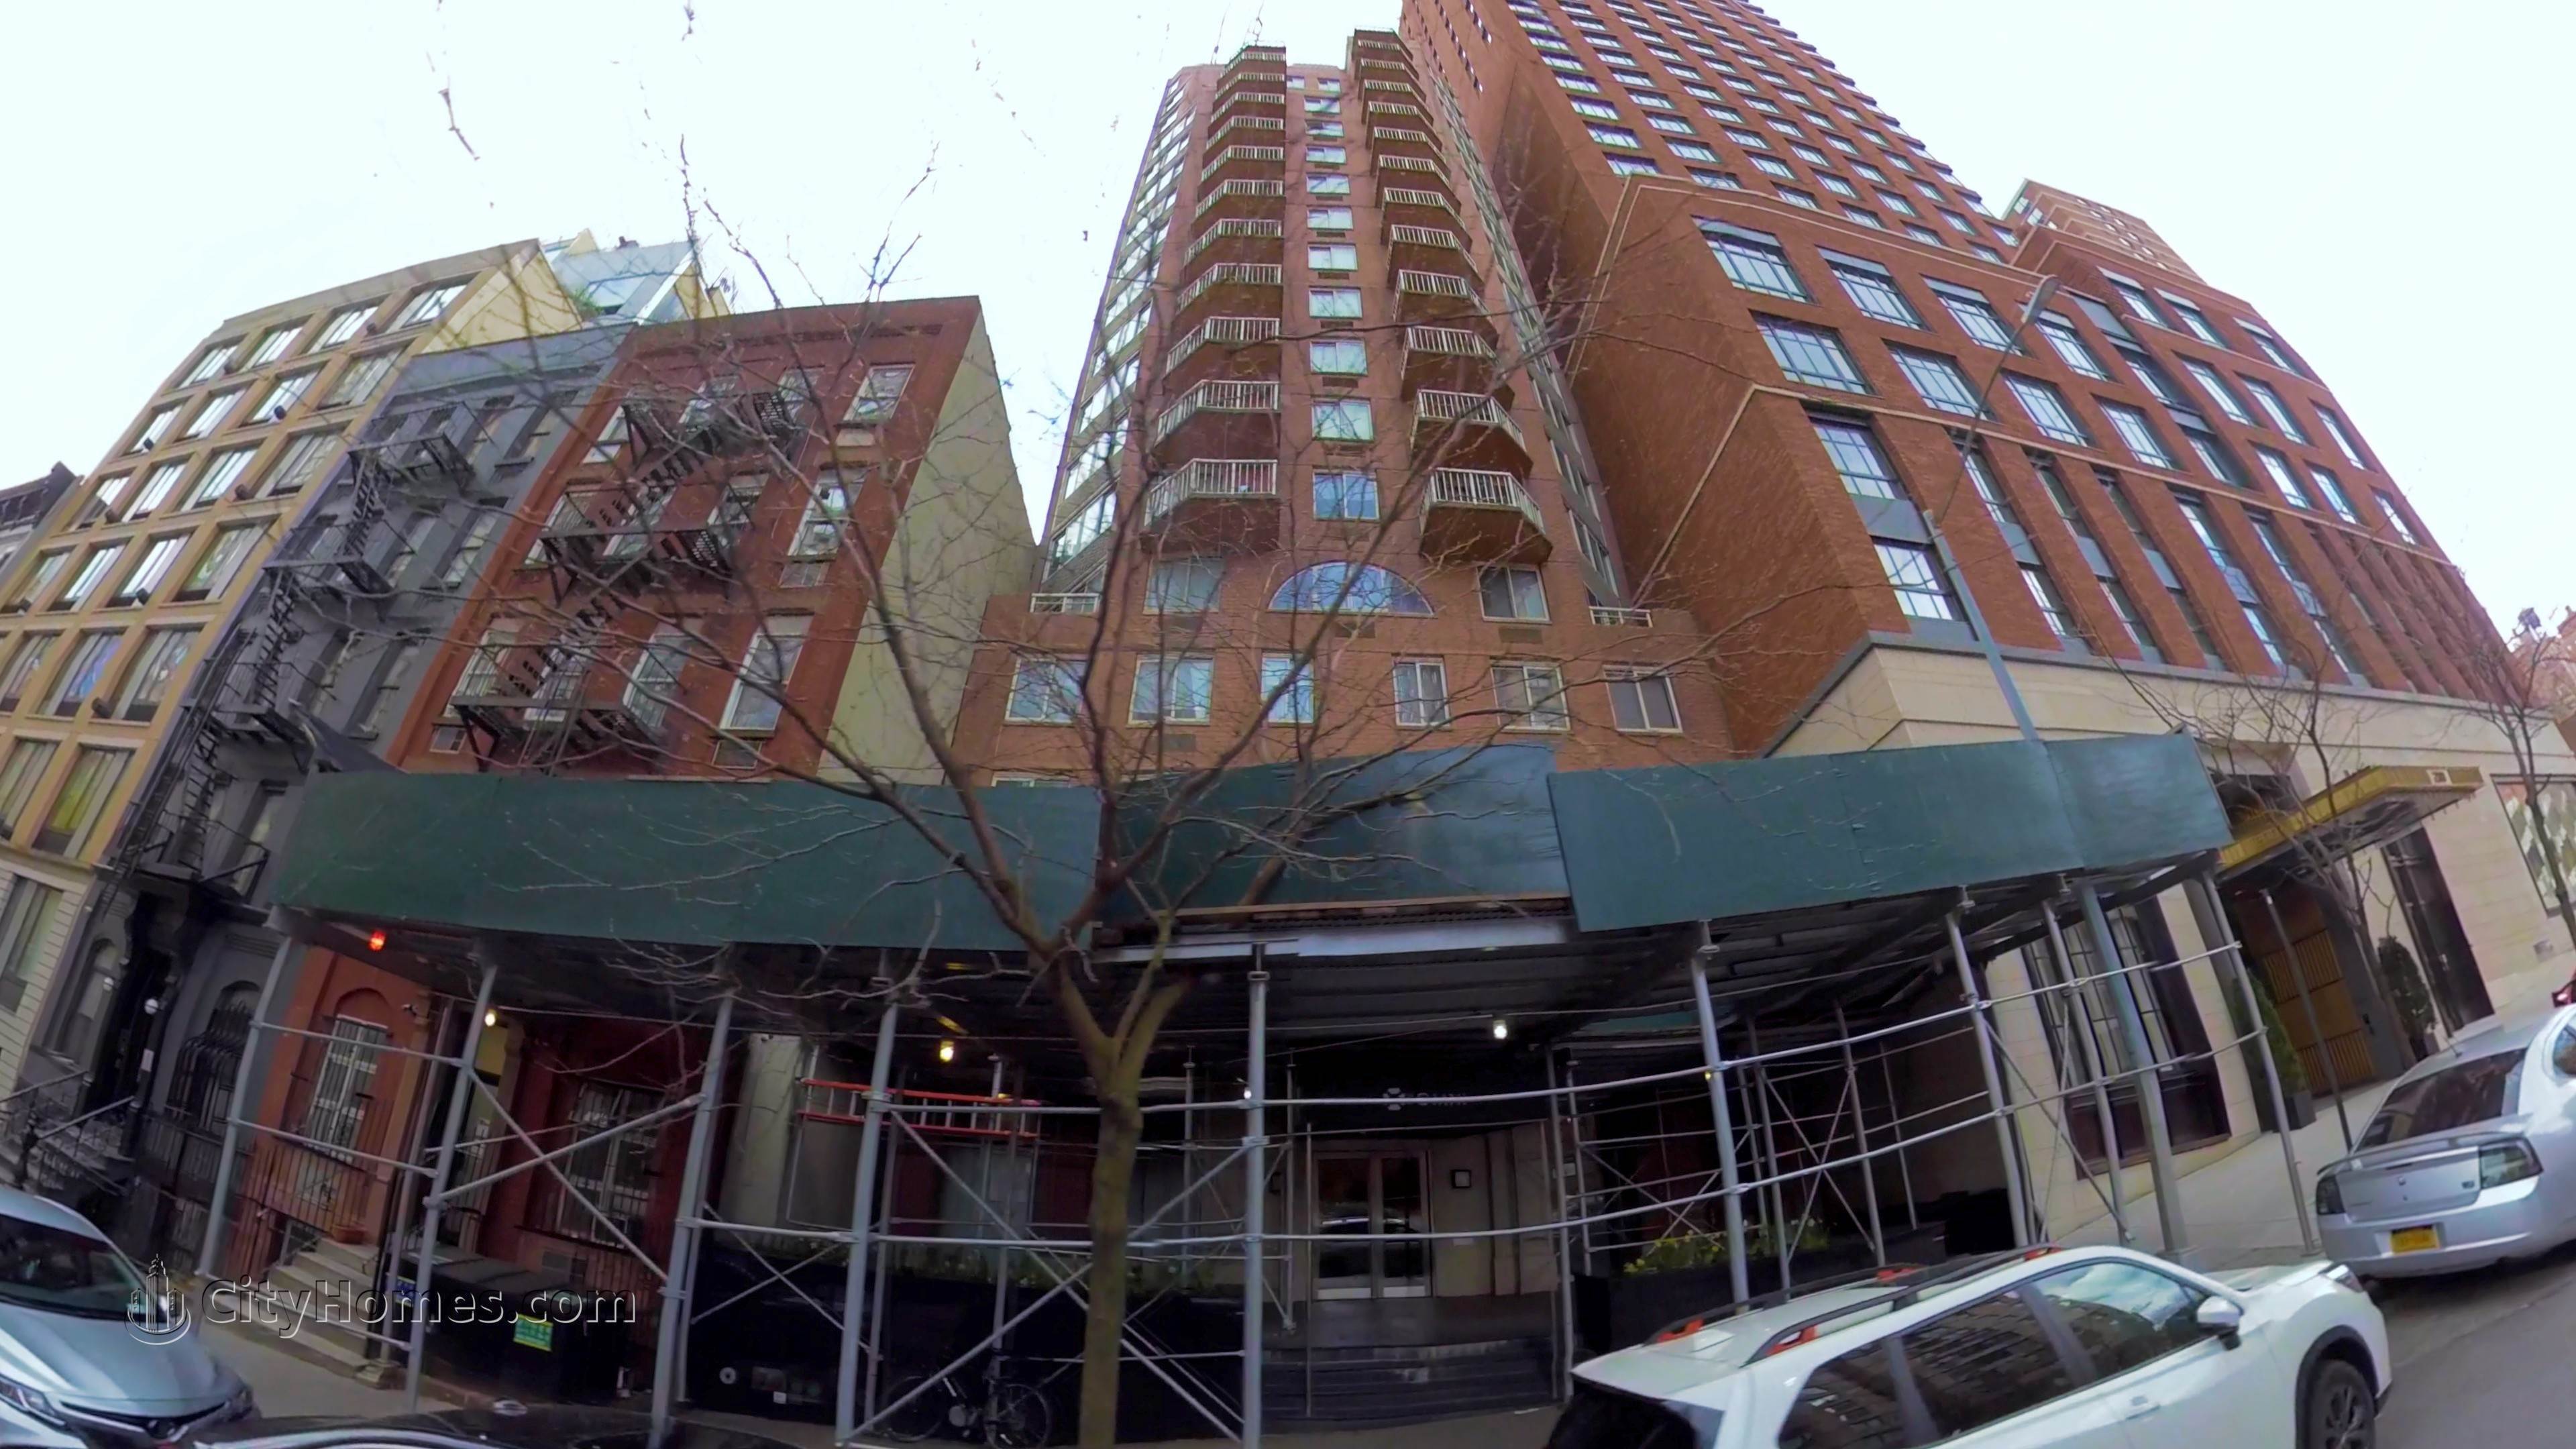 2. The Omni byggnad vid 206 East 95th Street, Yorkville, Manhattan, NY 10128